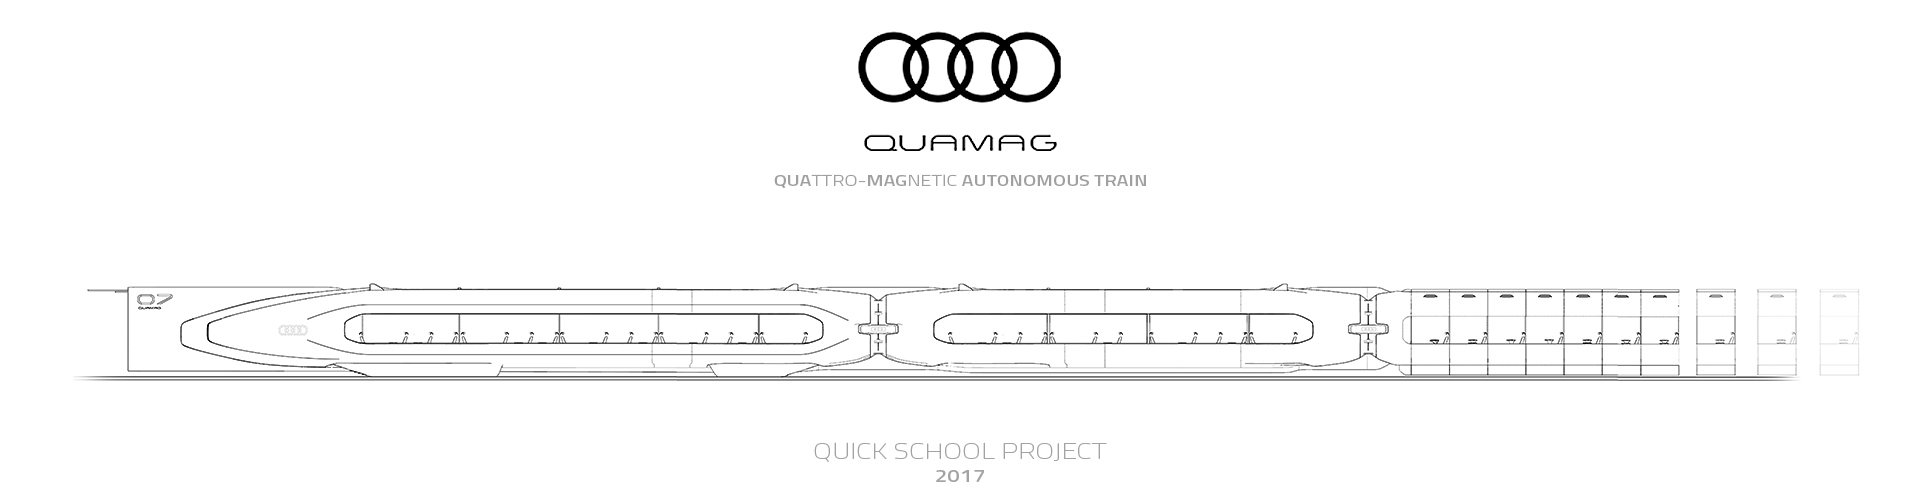 Audi Quamag - Train Concept design by MMelicharek